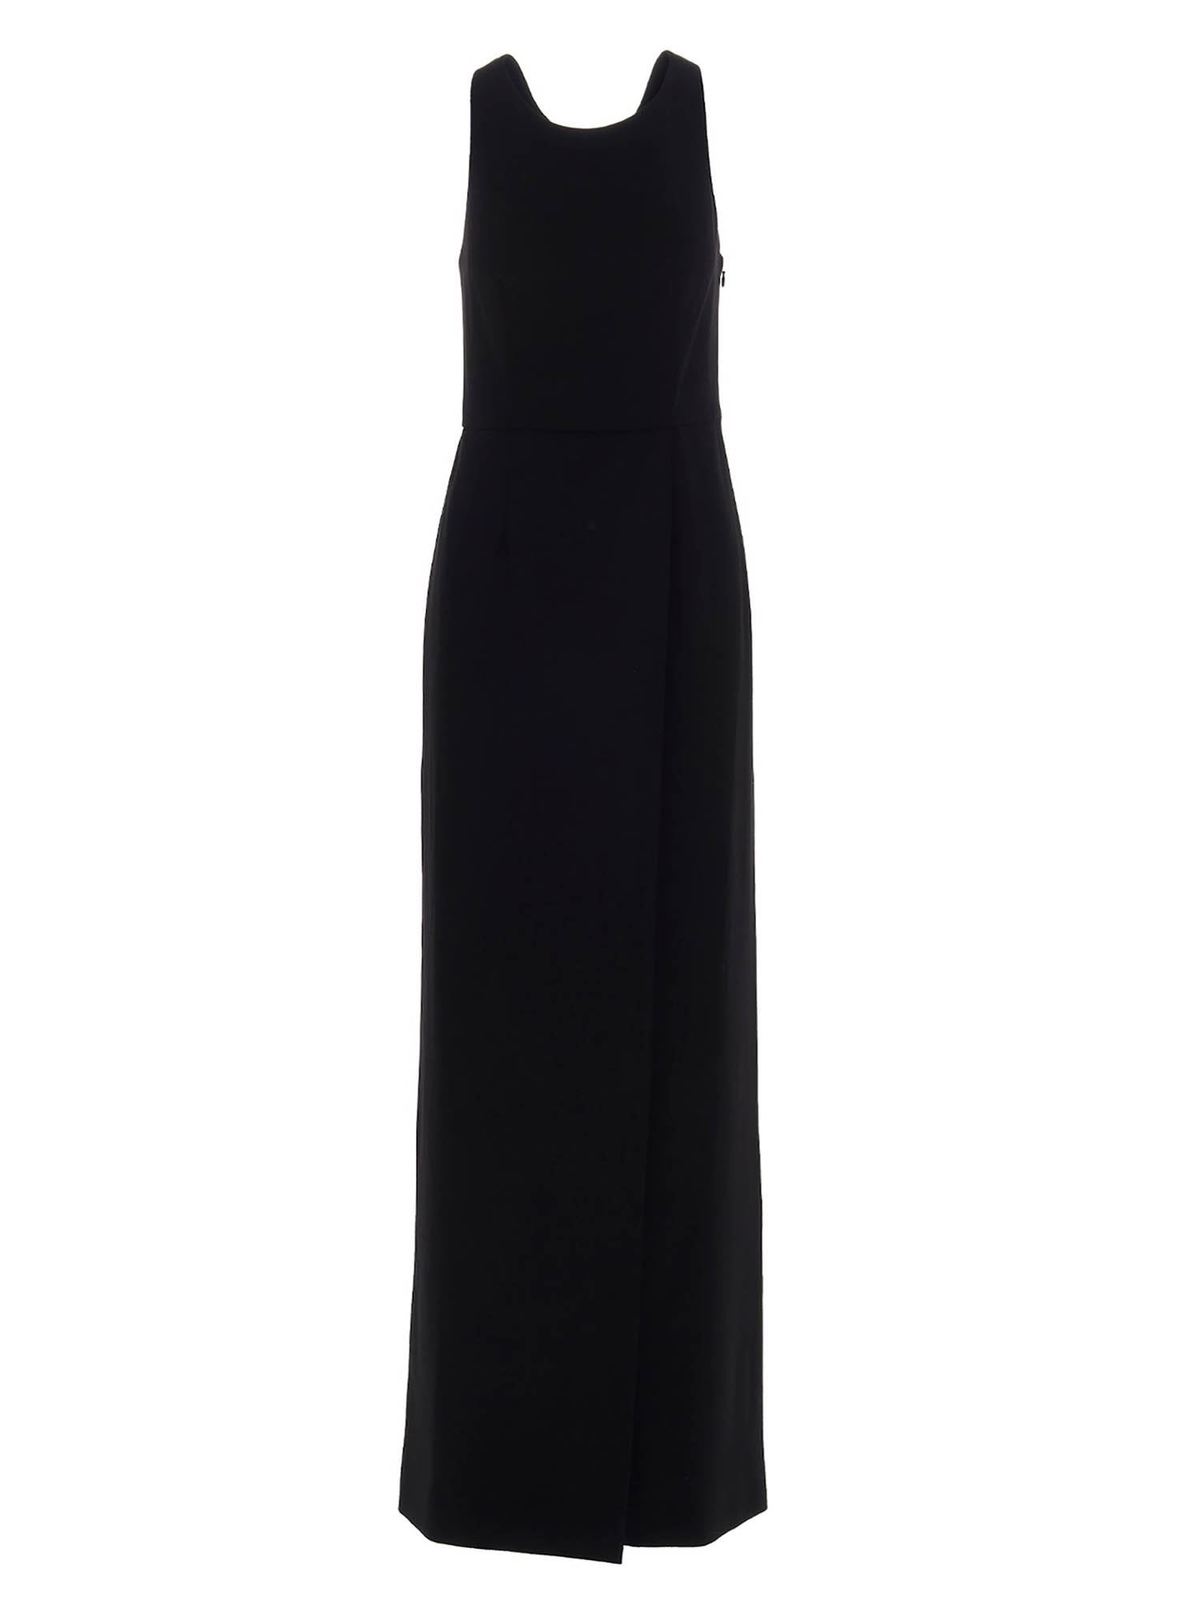 Maxi dresses Givenchy - Breakfast at Tiffany's dress in black ...